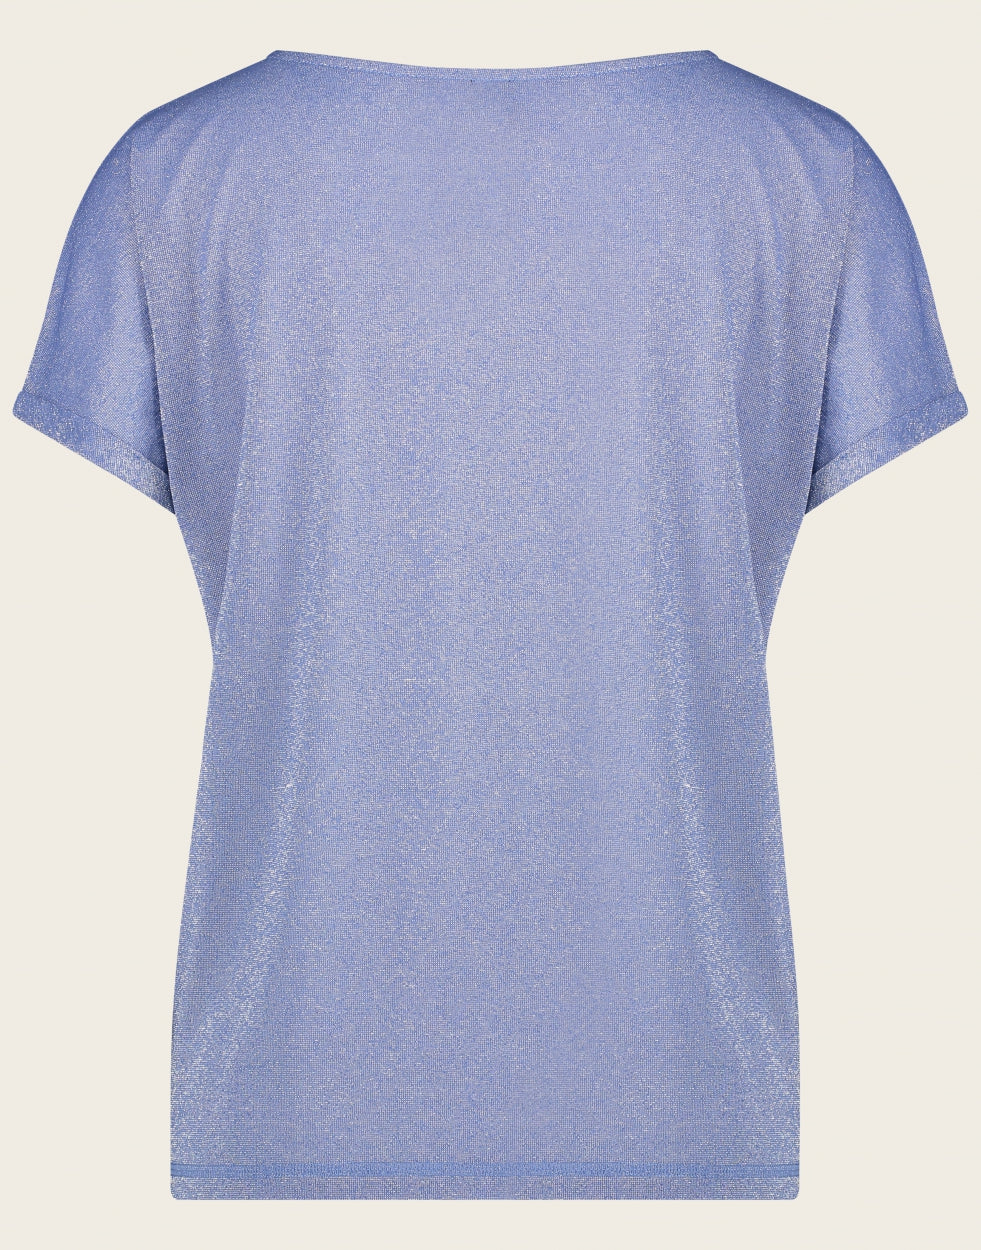 T shirt Kalie | Blue denim